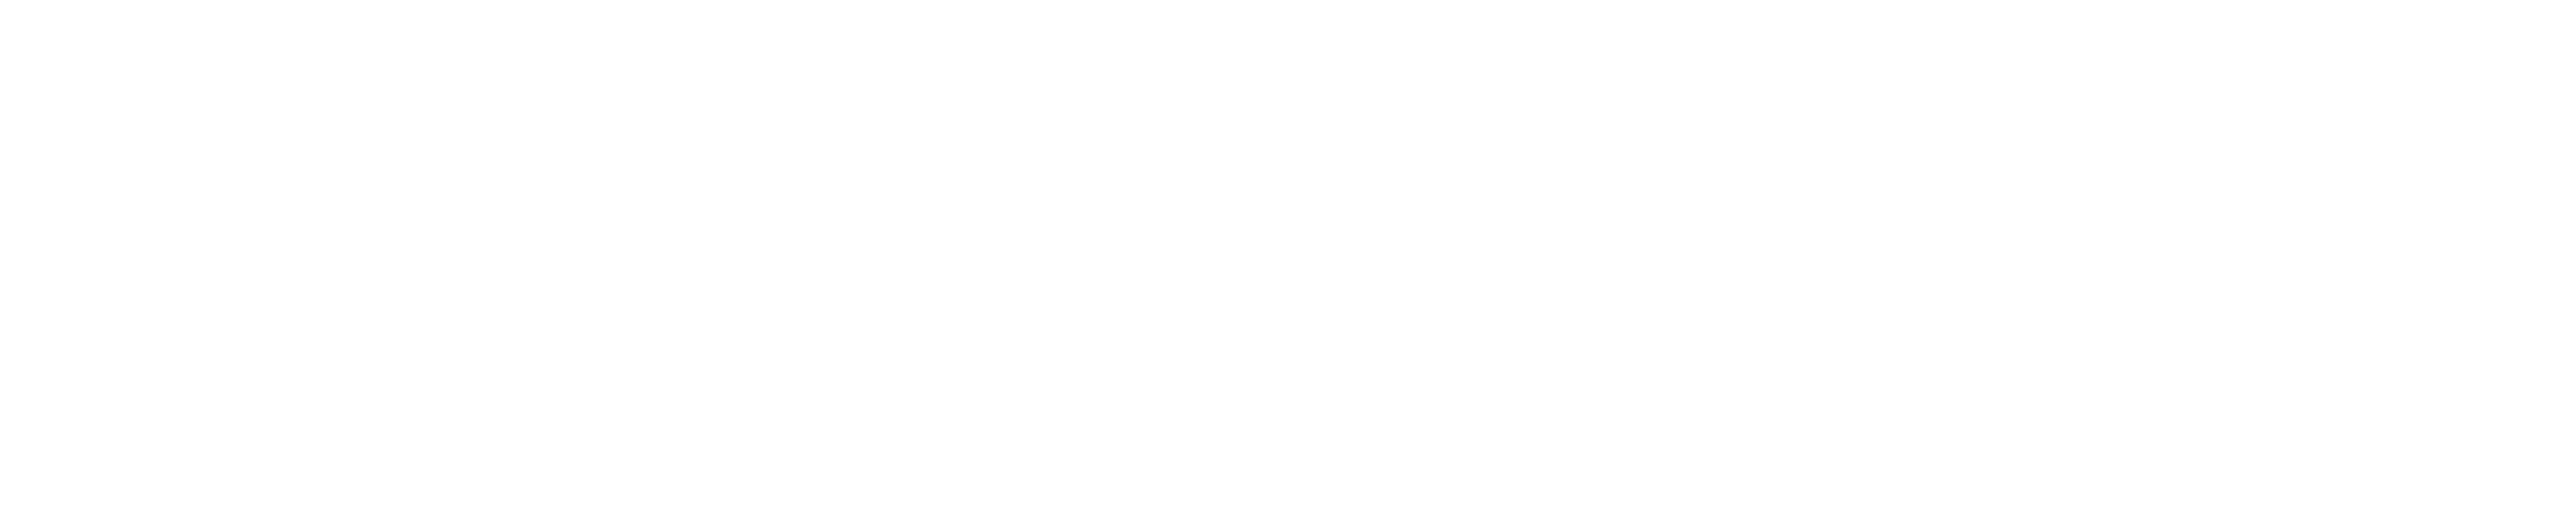 Uplifted Coffee logo